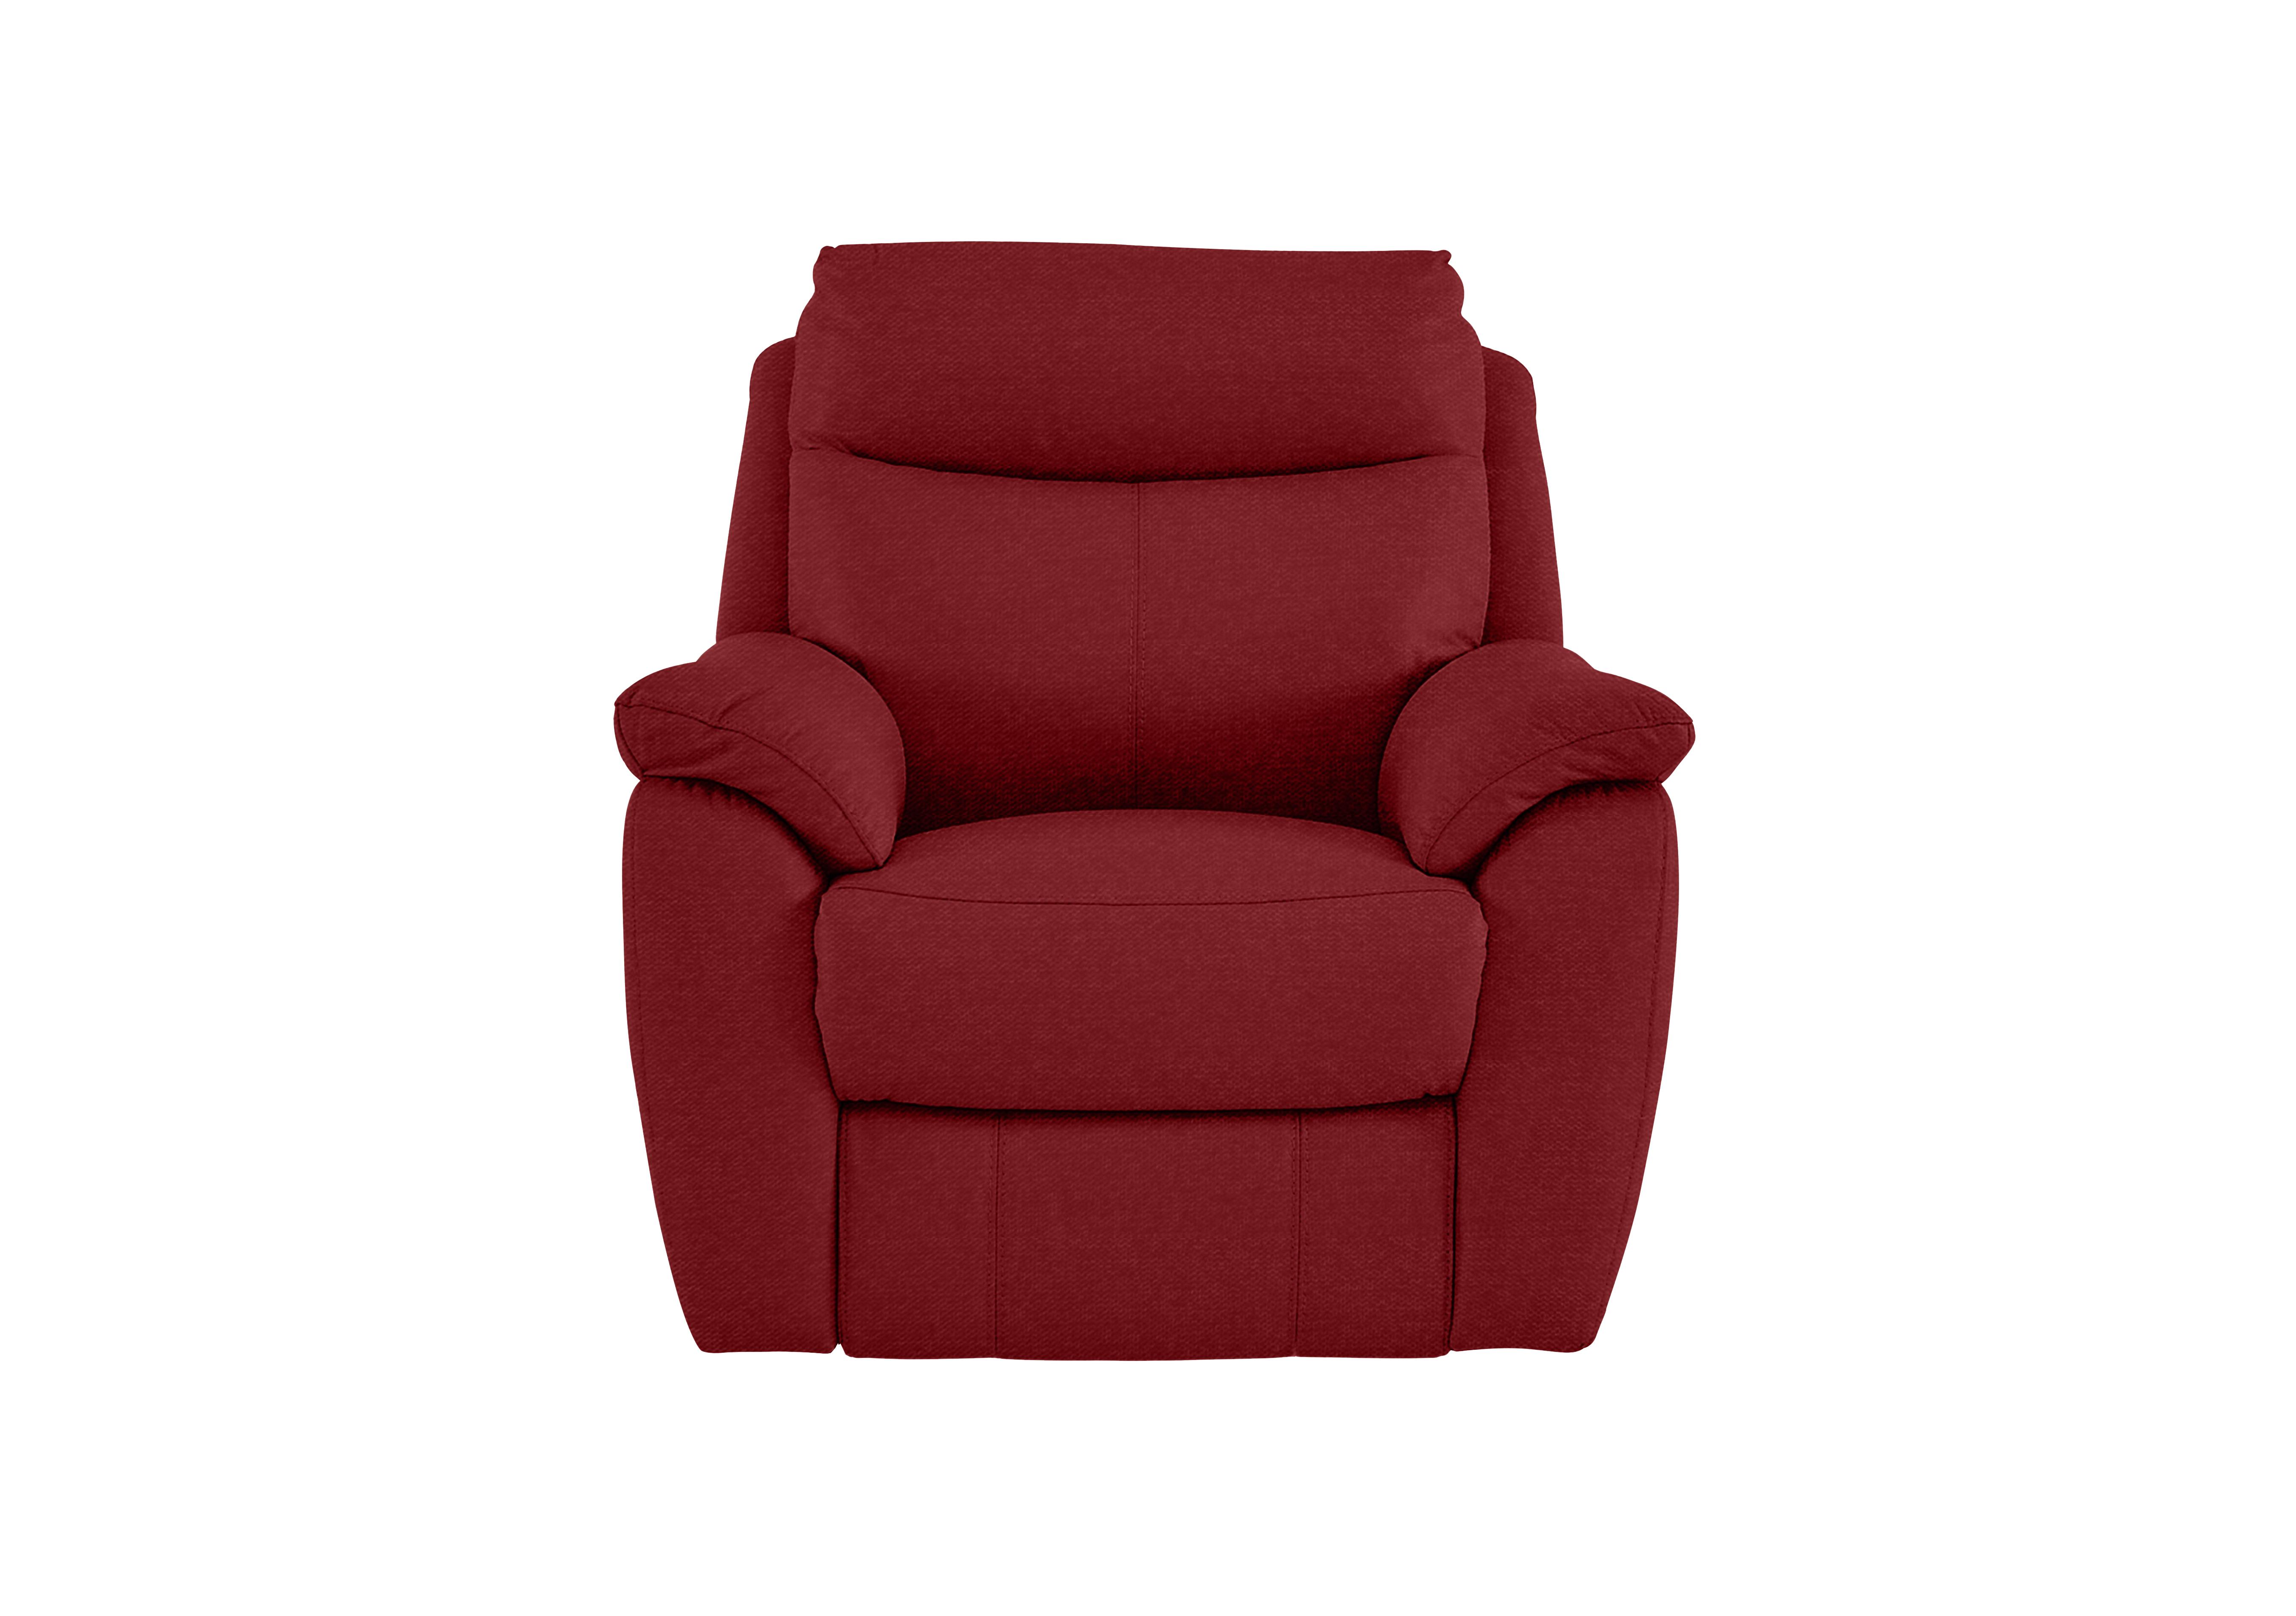 Snug Fabric Armchair in Fab-Blt-R29 Red on Furniture Village